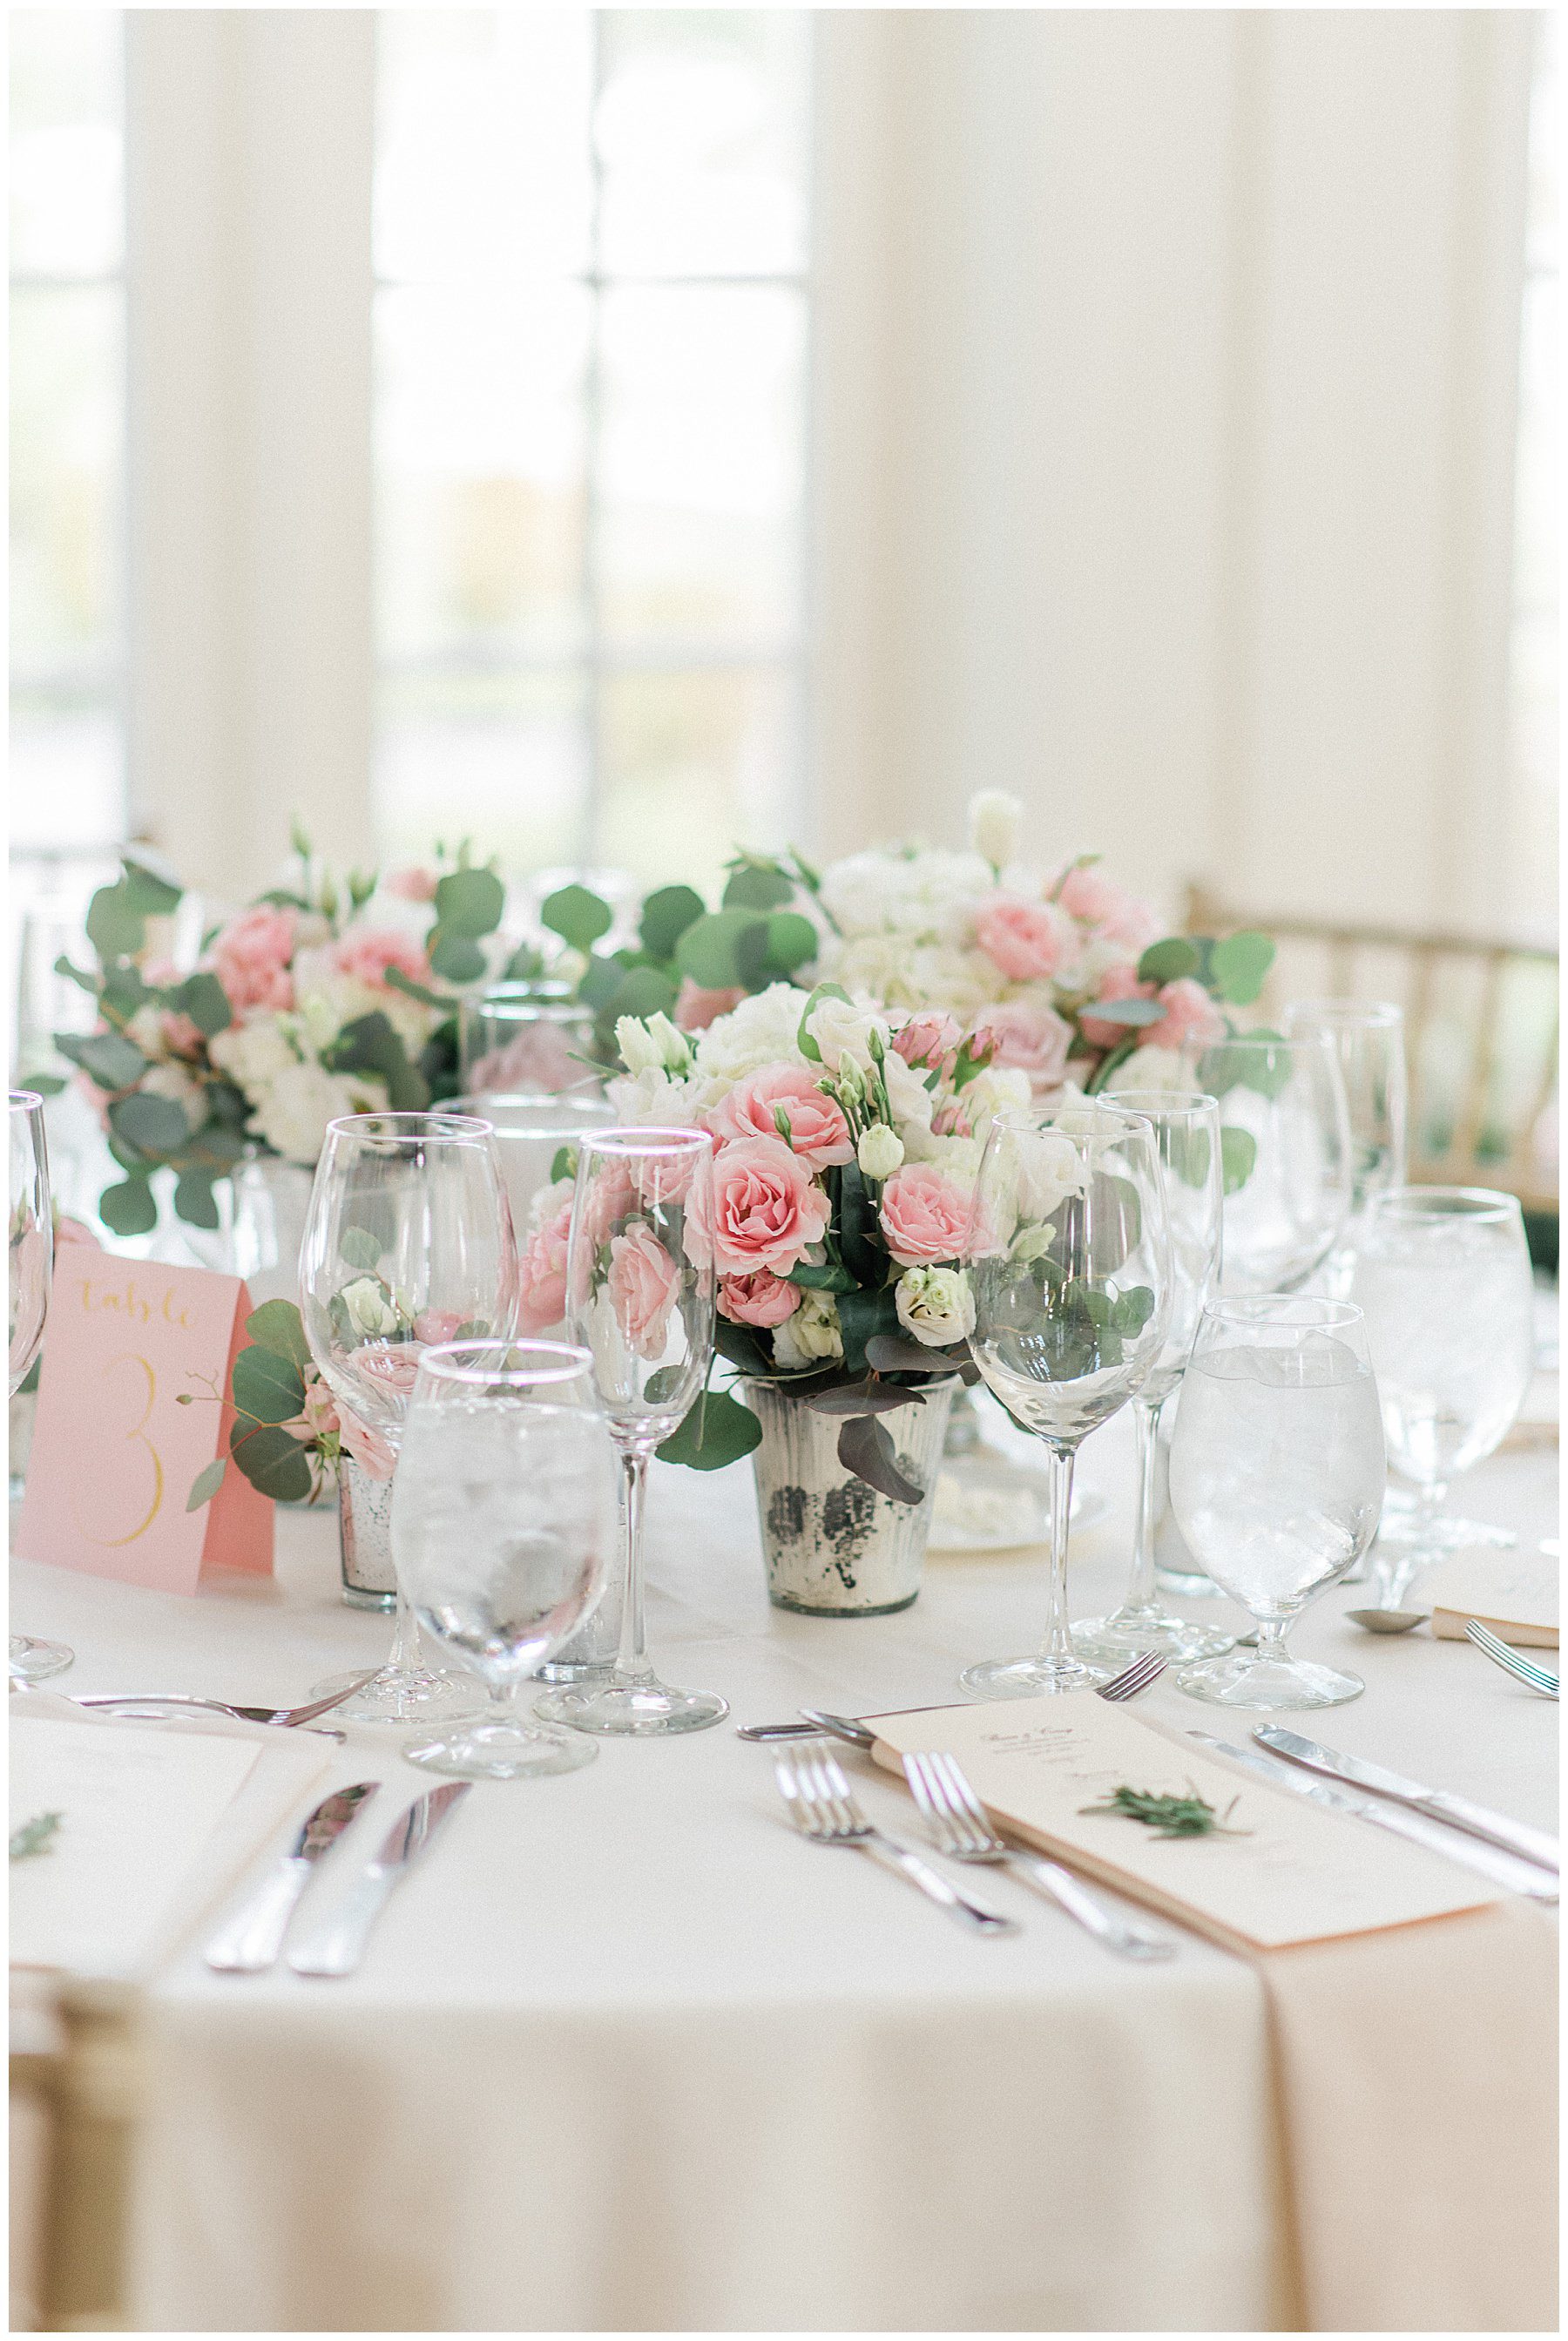 low flower arrangements in center of reception tables